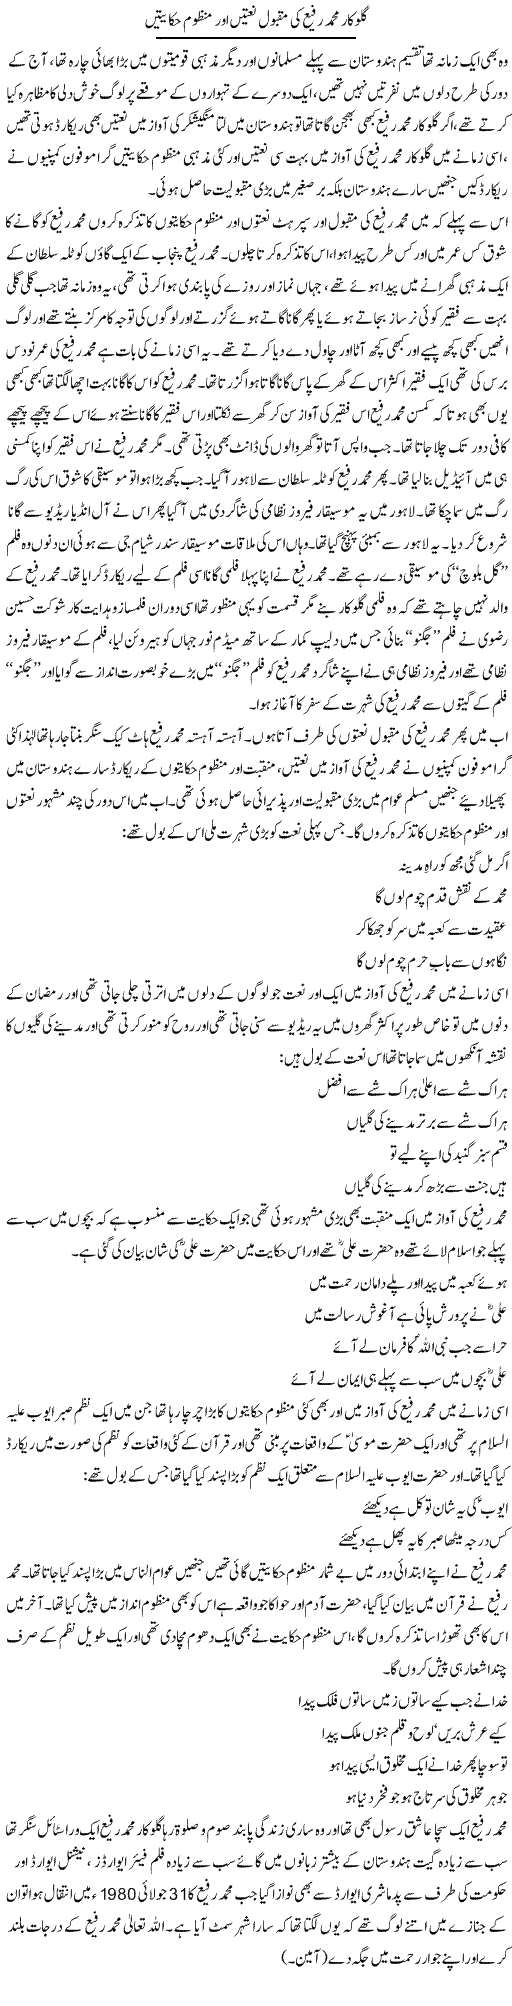 Gulukar Muhammad Rafi Ki Maqbool Natain Aur Manzoom Hikayatein | Younus Hamdam | Daily Urdu Columns